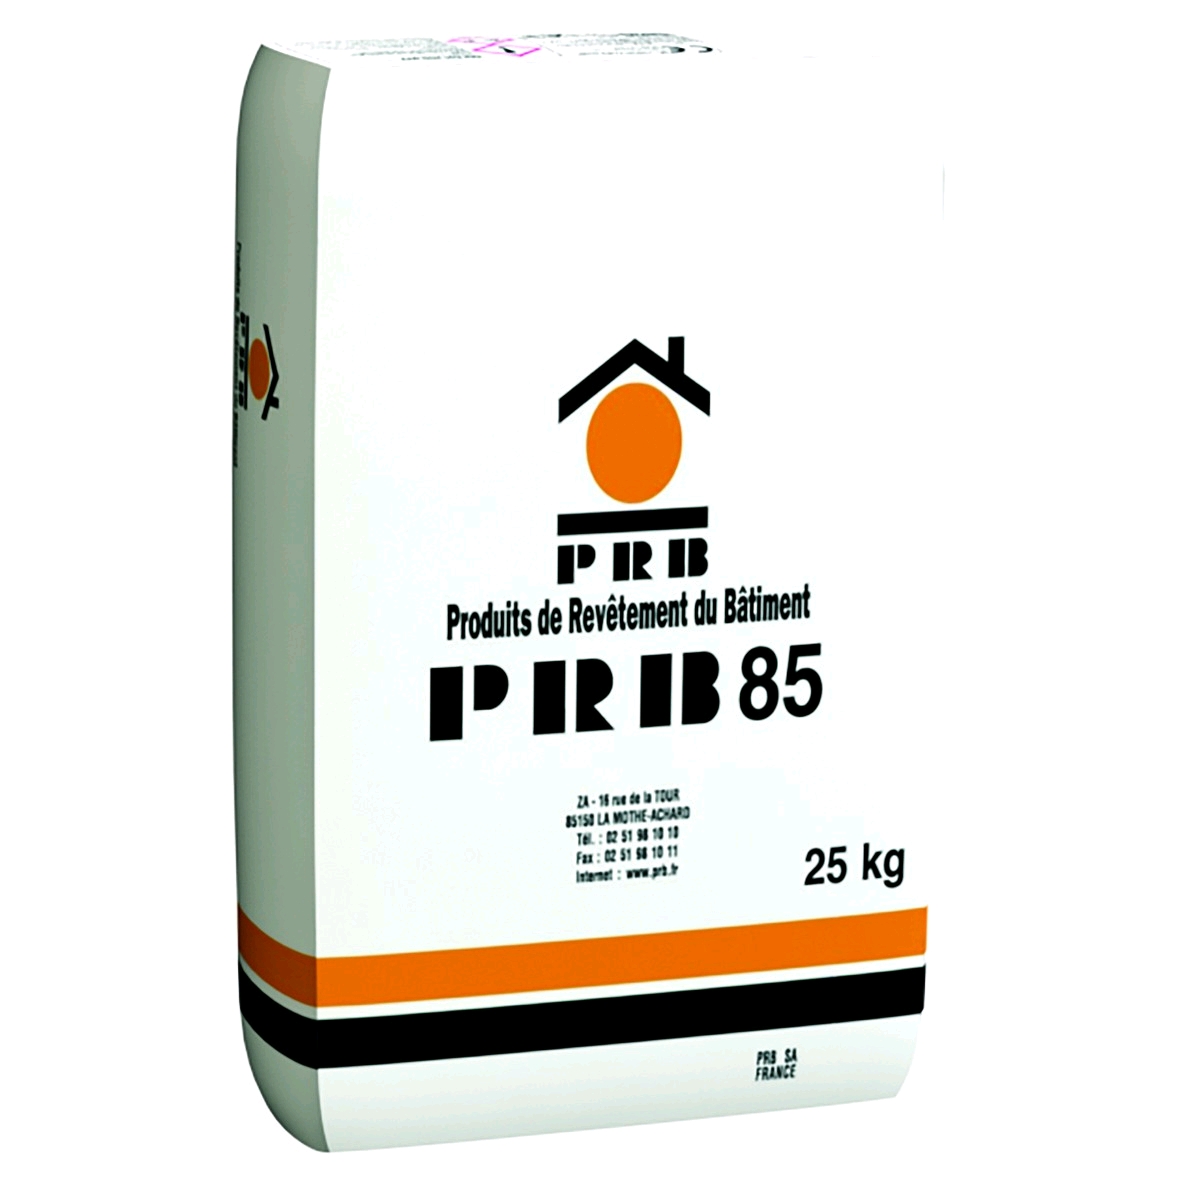 PRB 85 Ton Pierre 25Kg